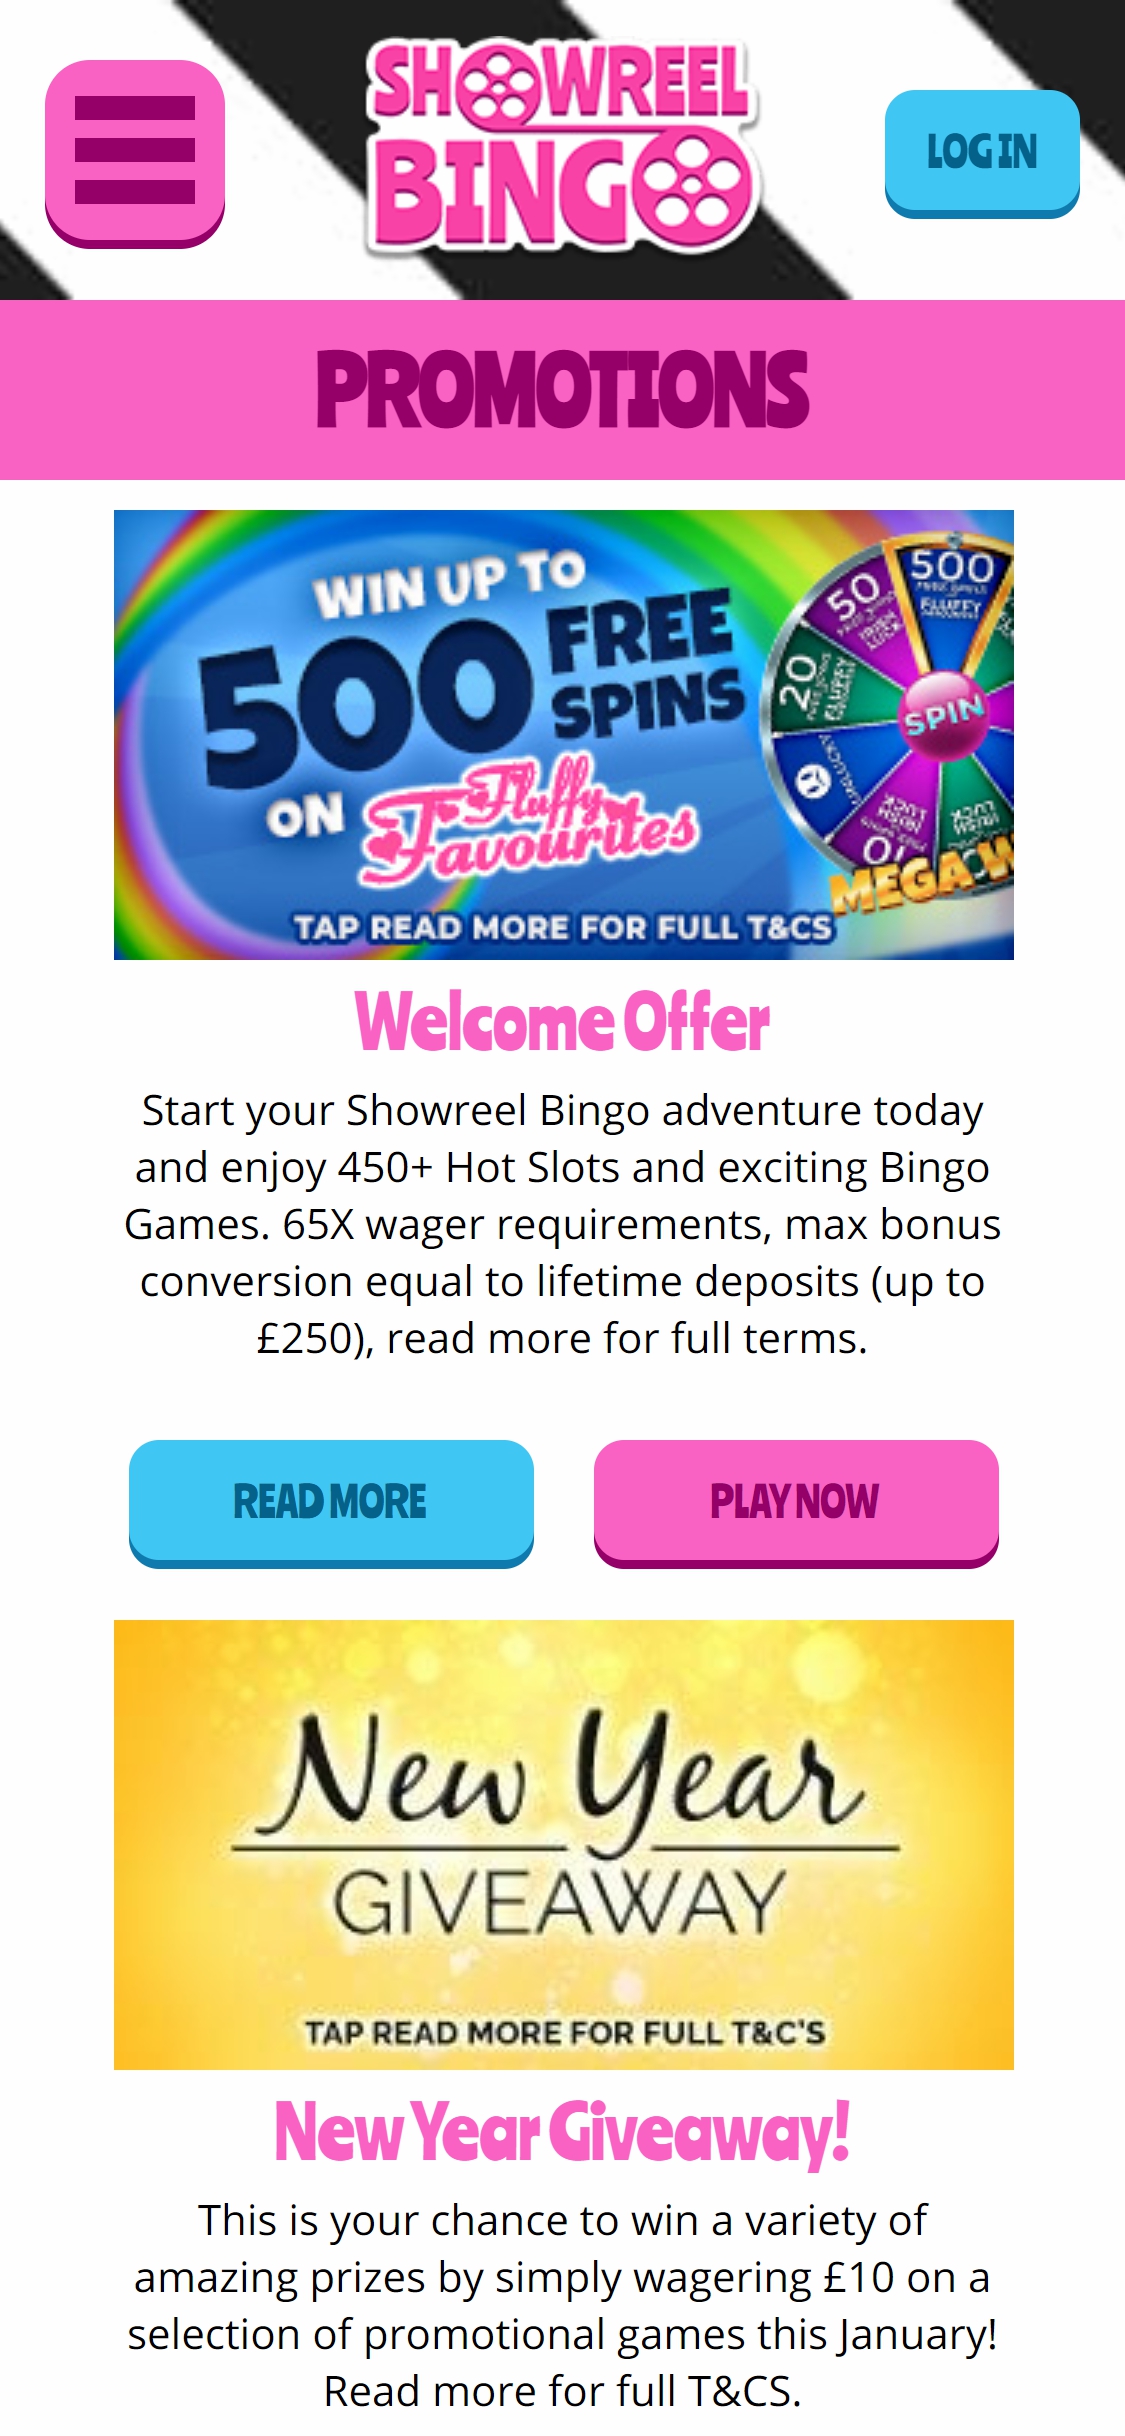 Showreel Bingo Casino Mobile No Deposit Bonus Review